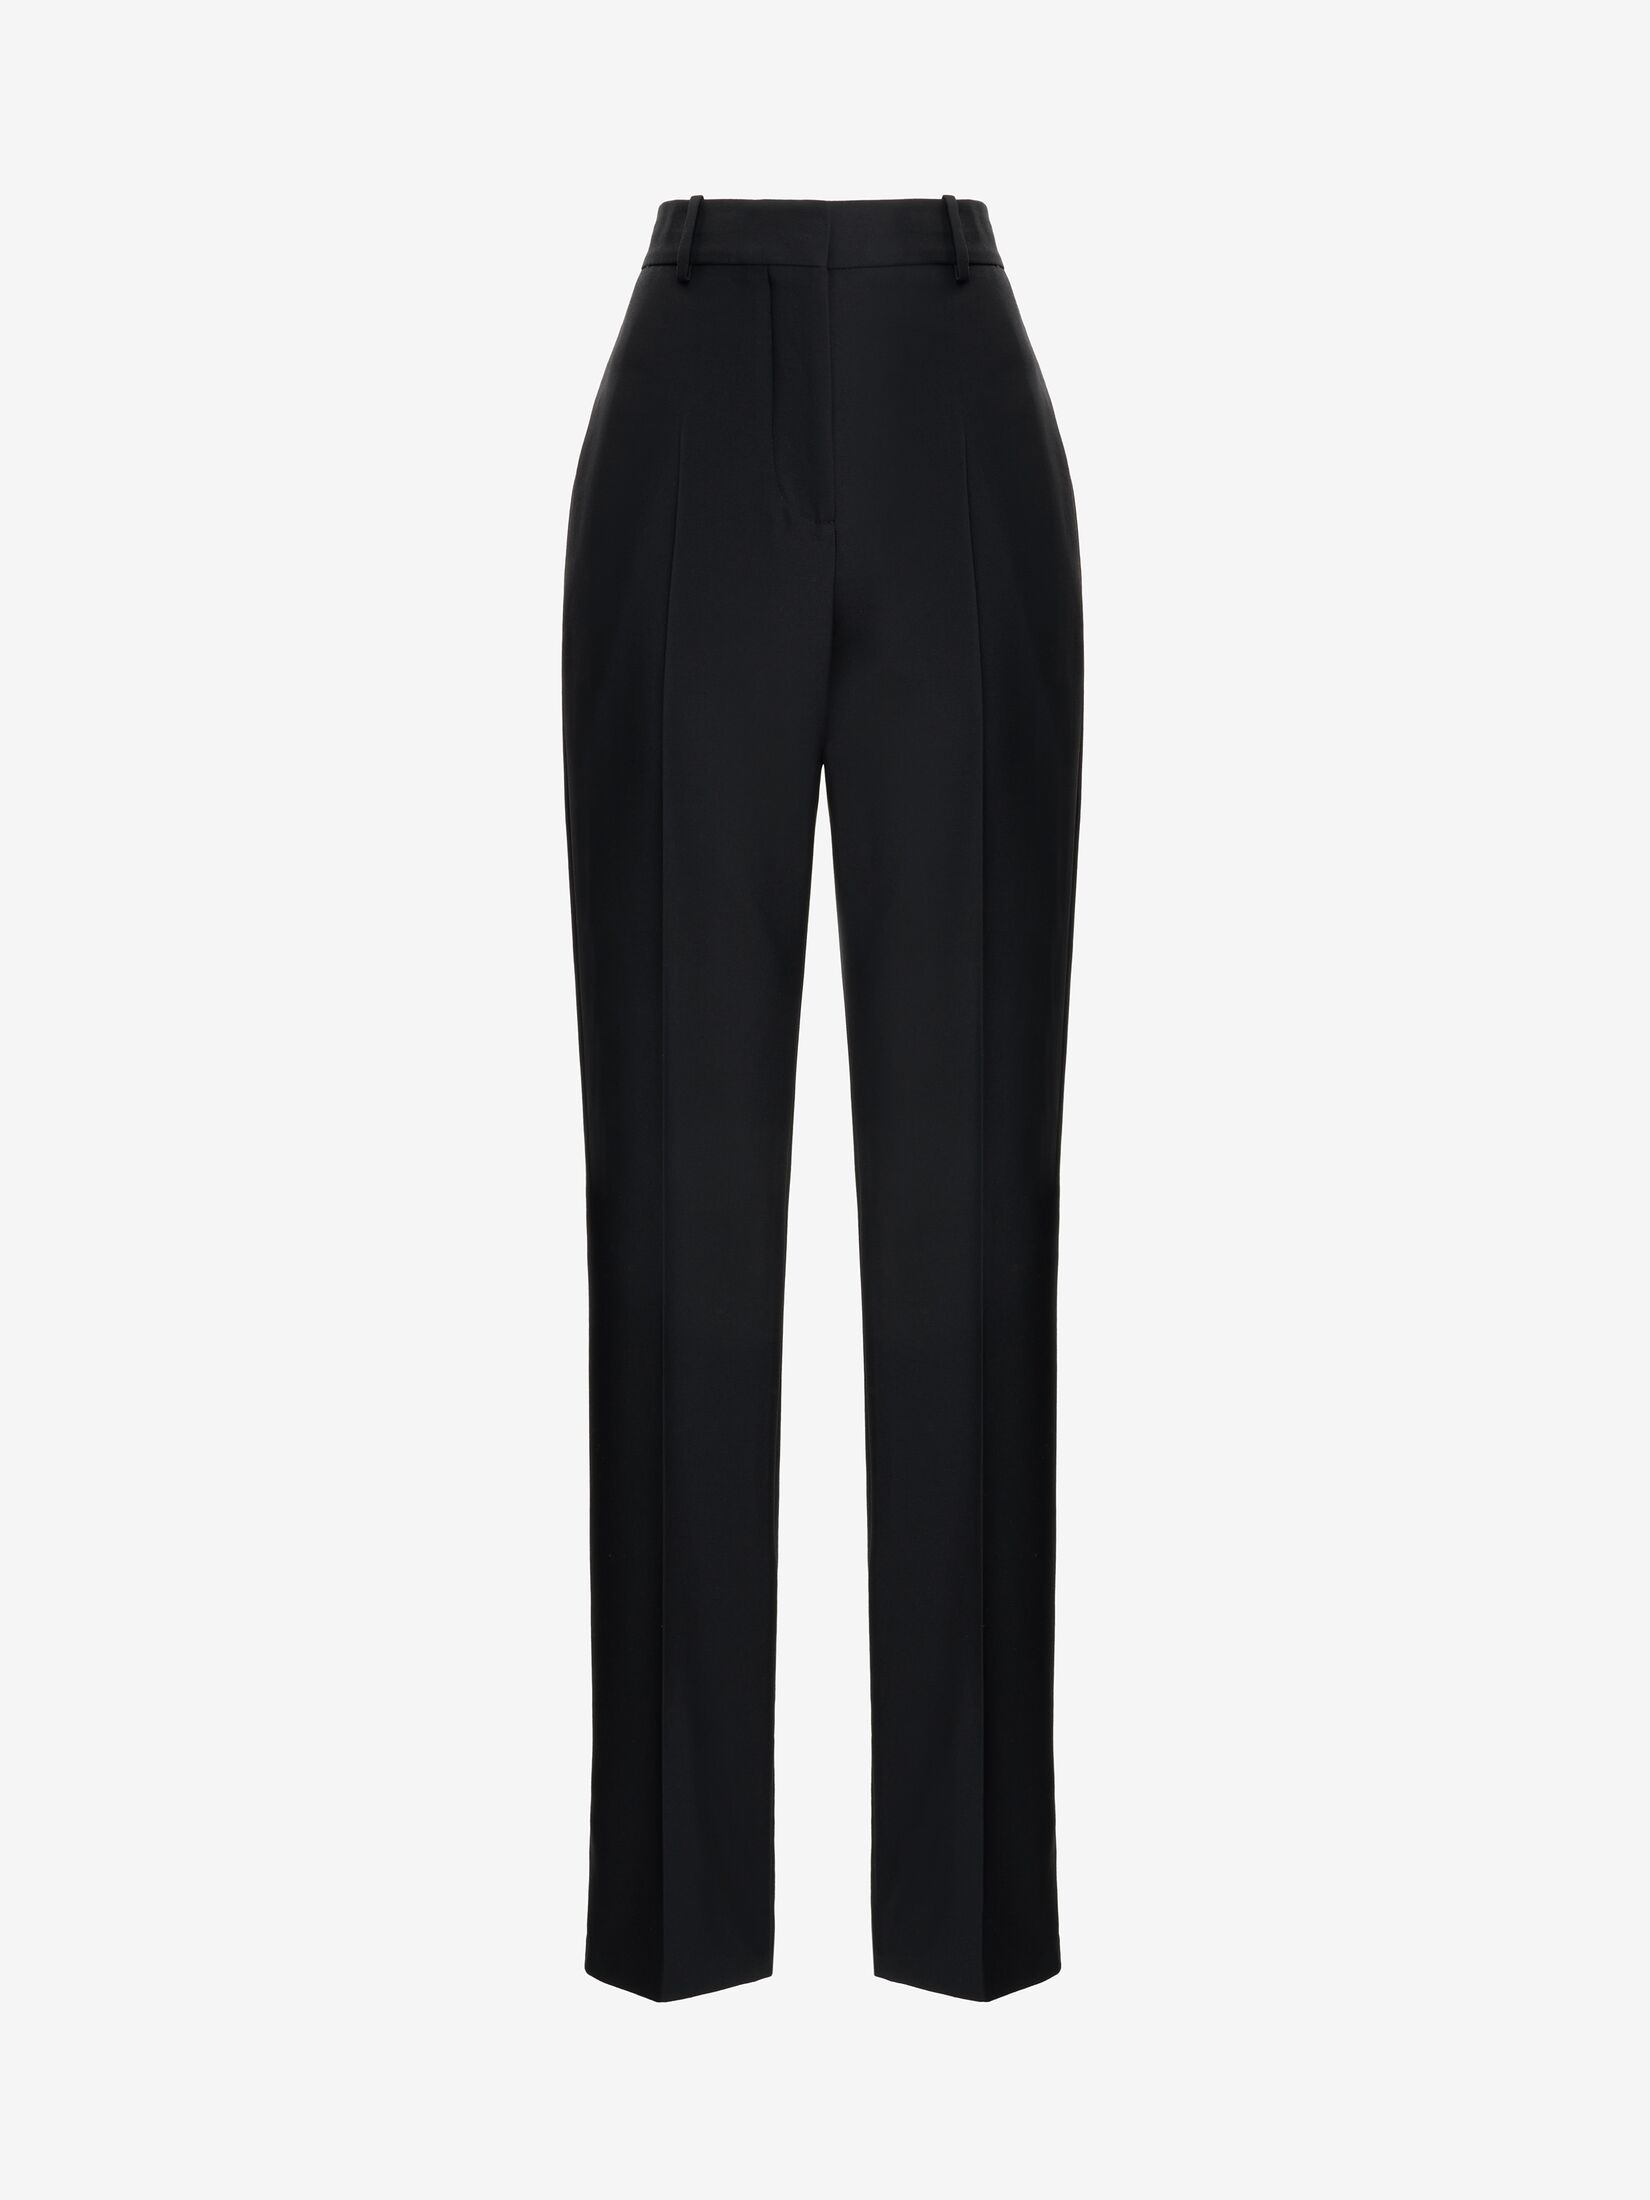 Women's Tailored Pants | sass & bide Official Online Store